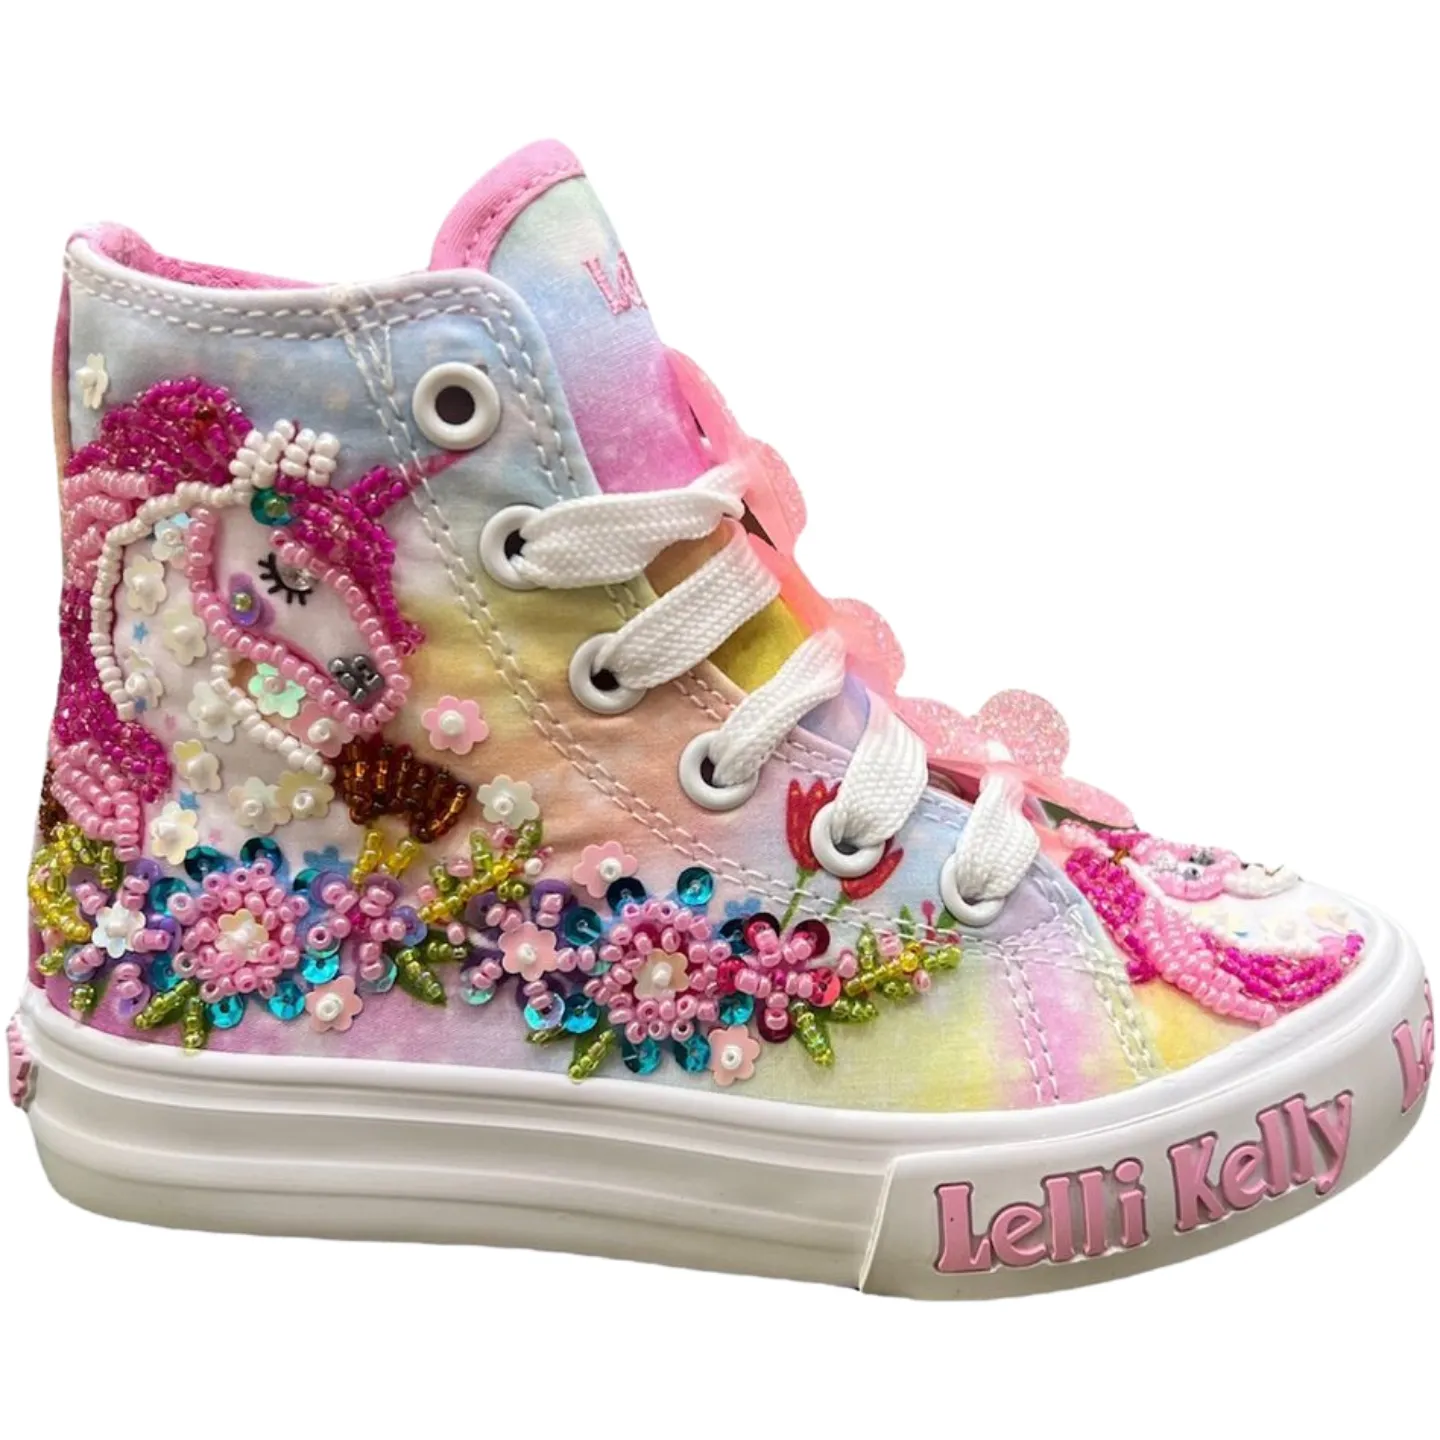 Lelli Kelly Sneakers Da Bambina Lked1002 - LKED1002